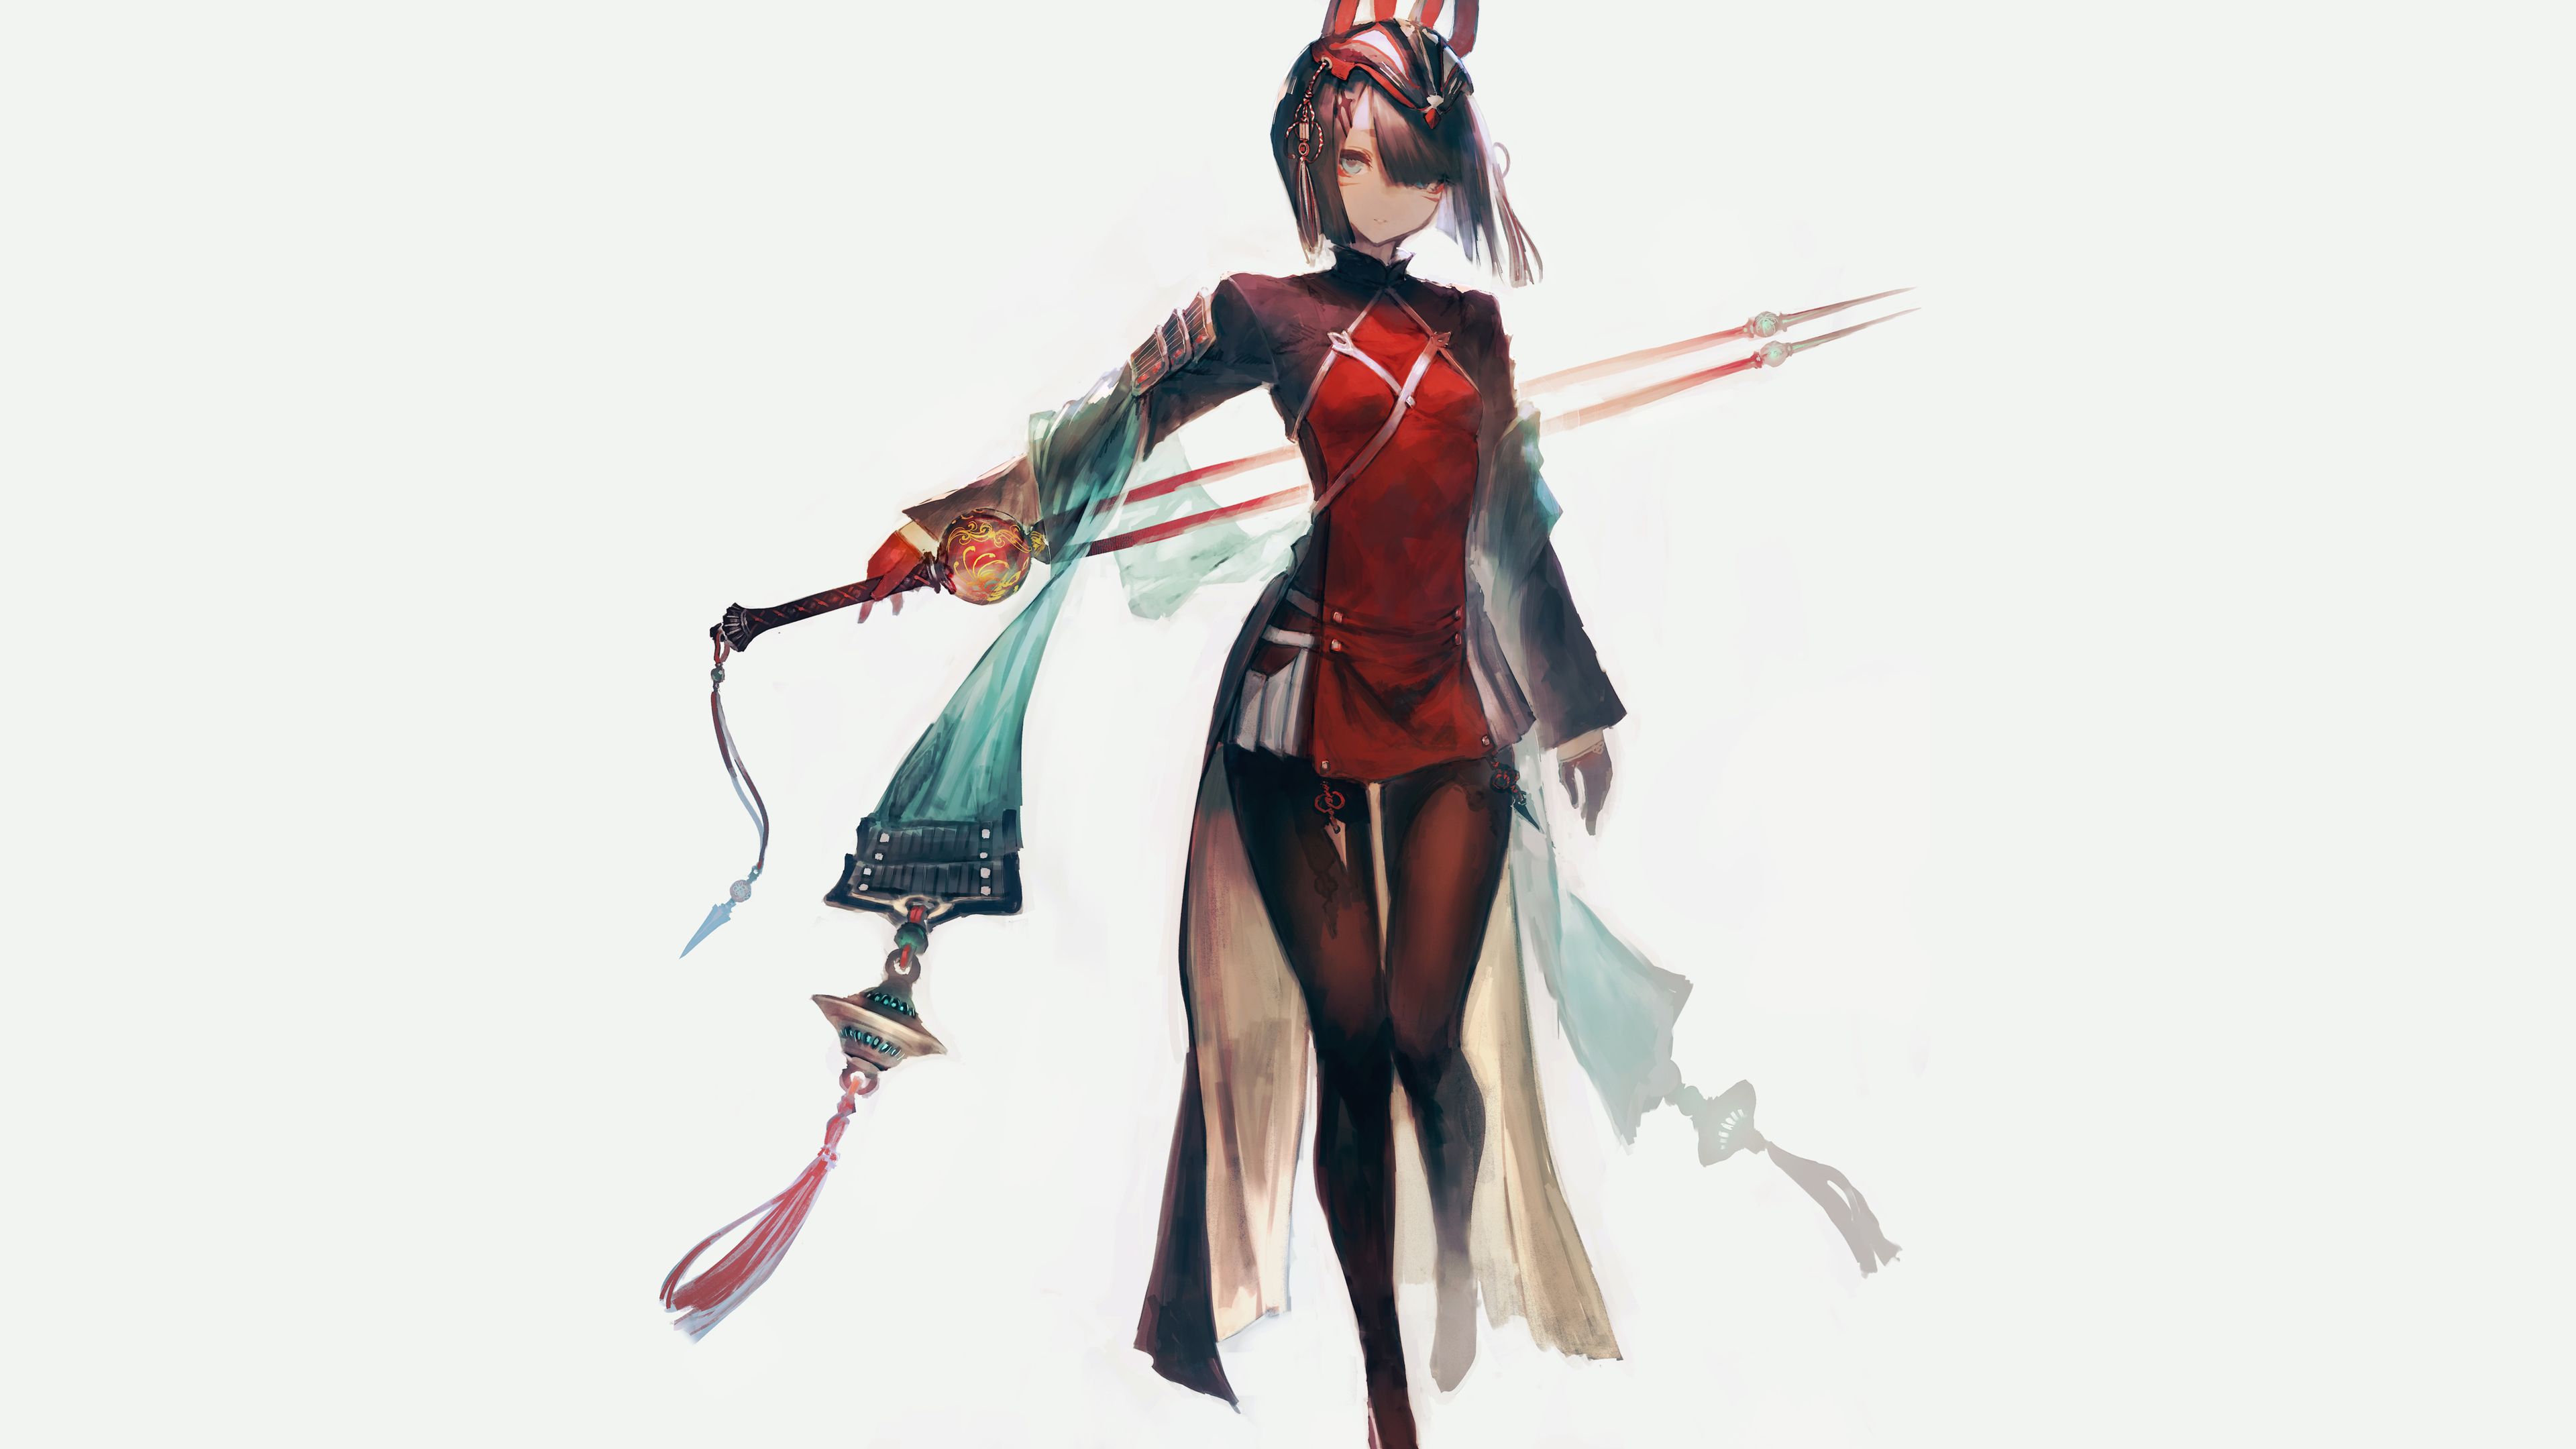 Cool Anime Girl With Sword Wallpaper